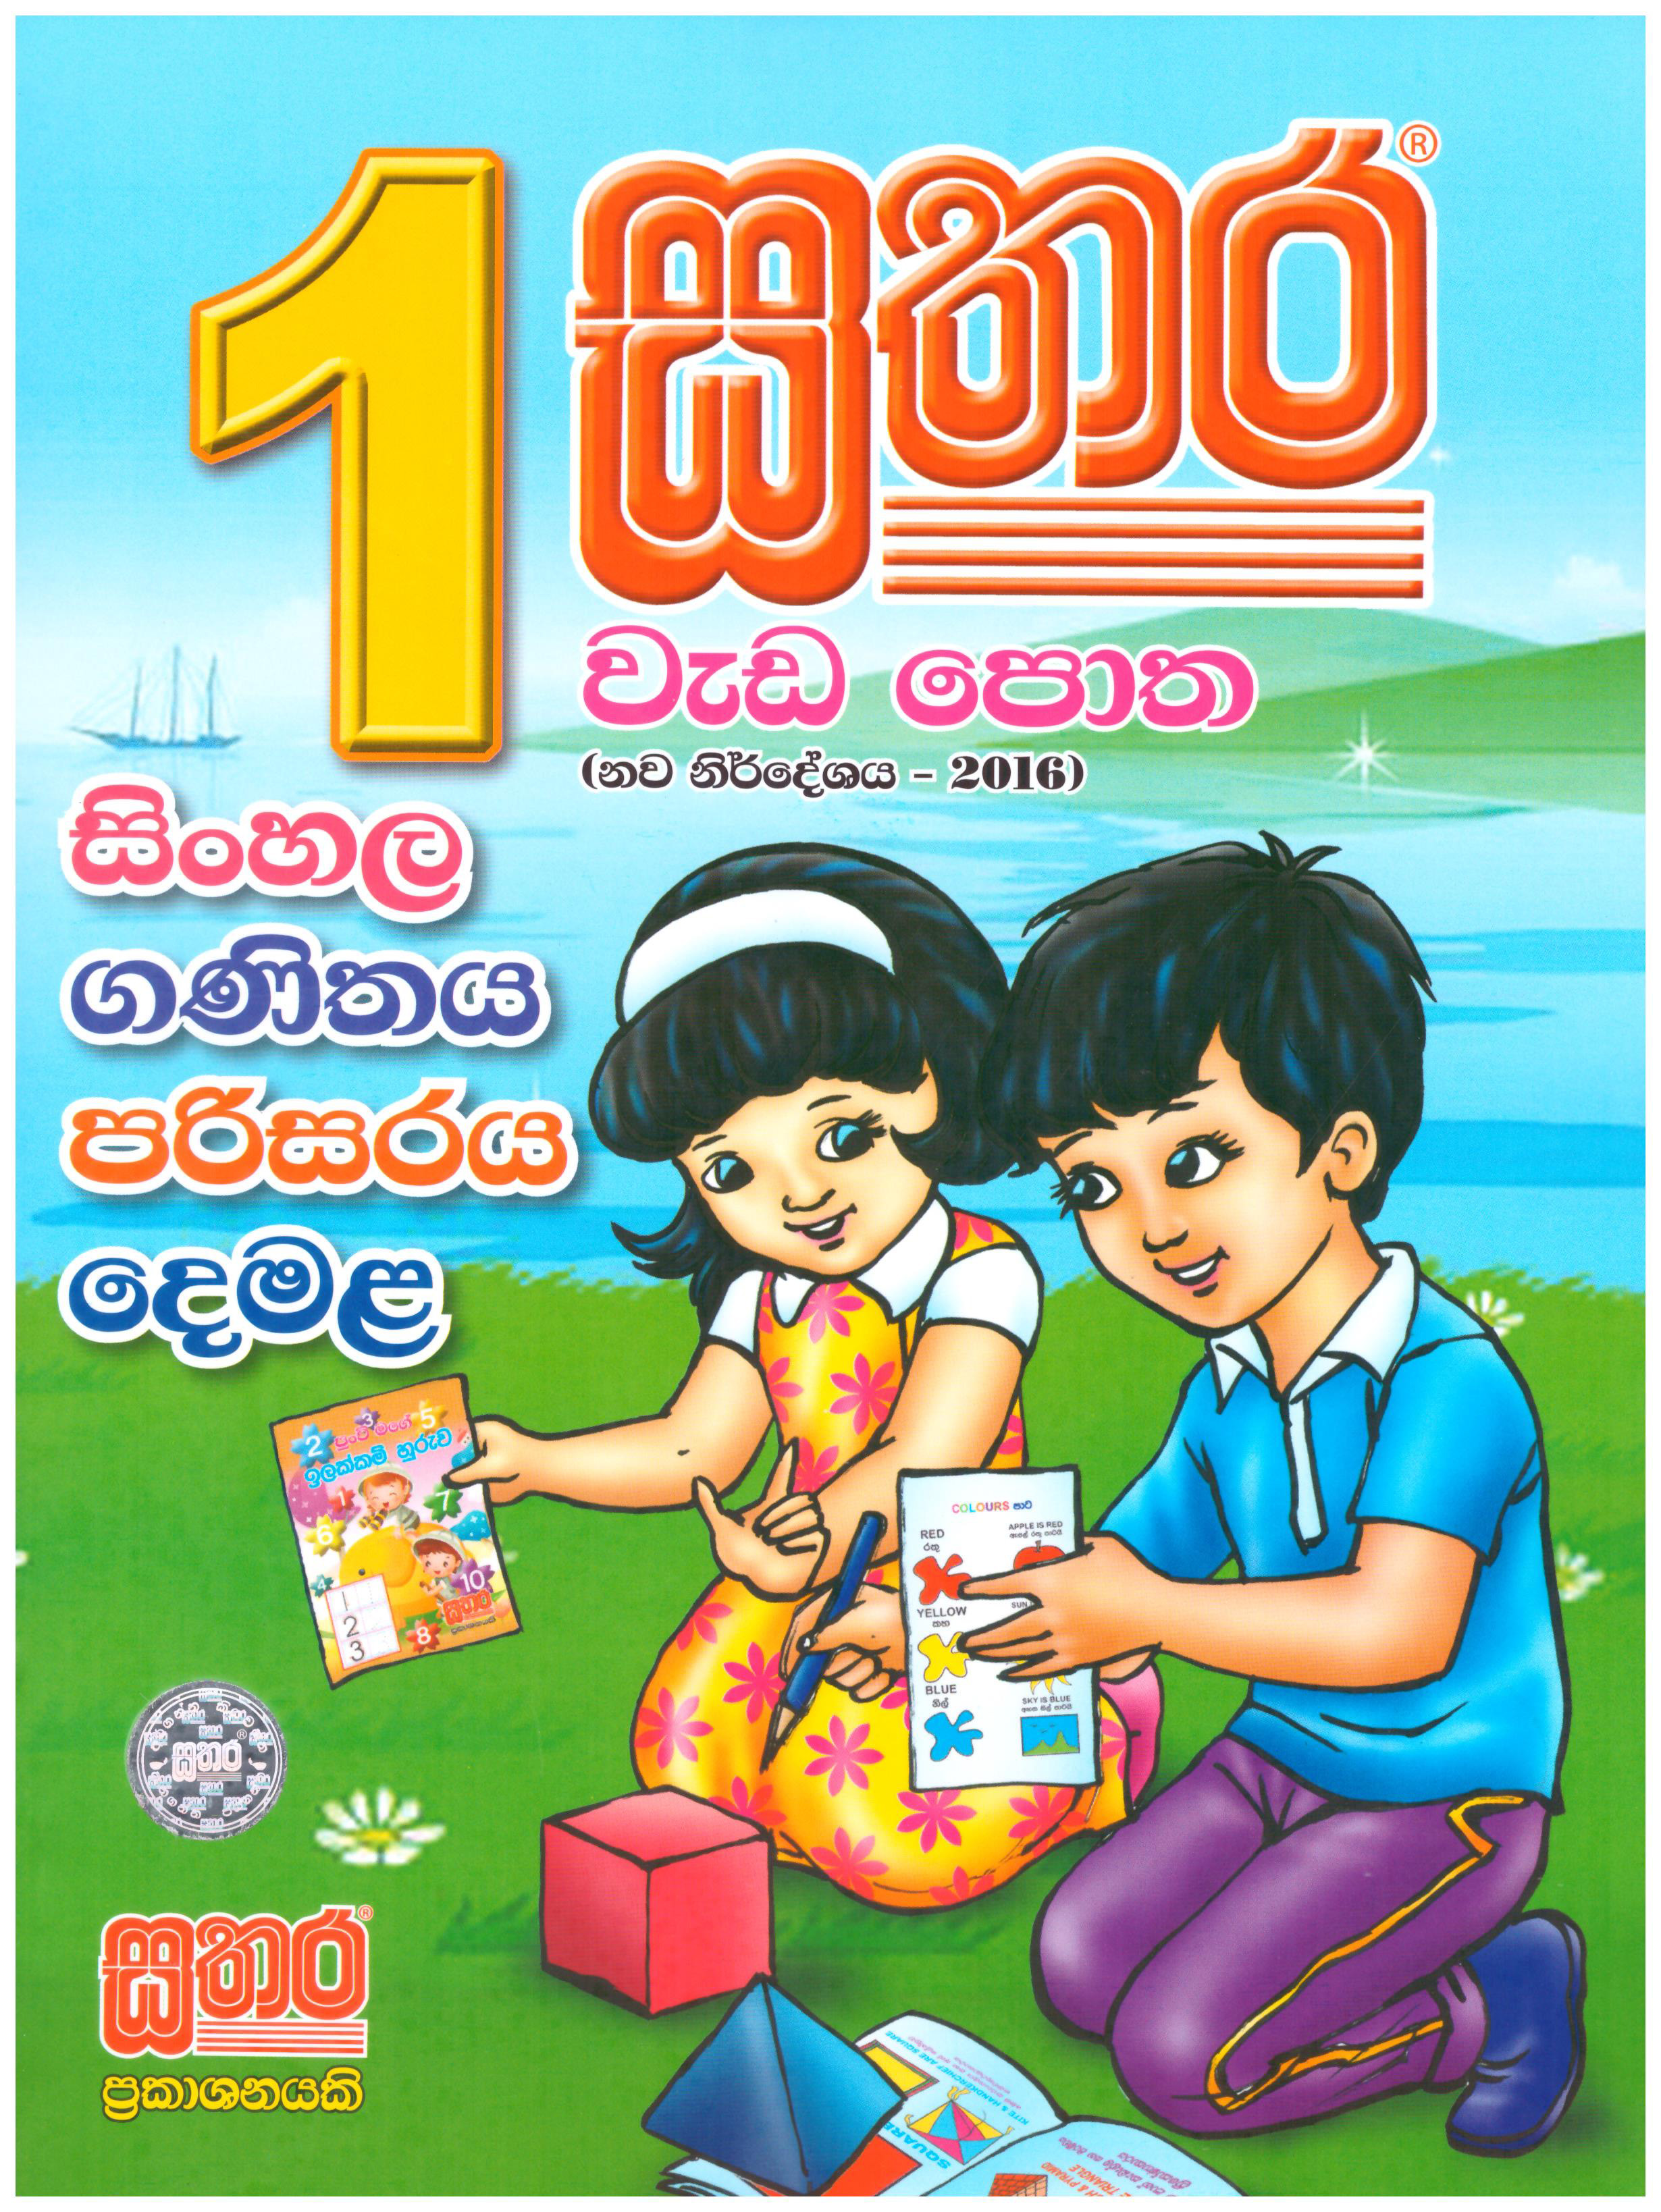 Sathara Weda Potha Grade 01 (Sinhala, Ganithaya, Parisaraya, Demala) 